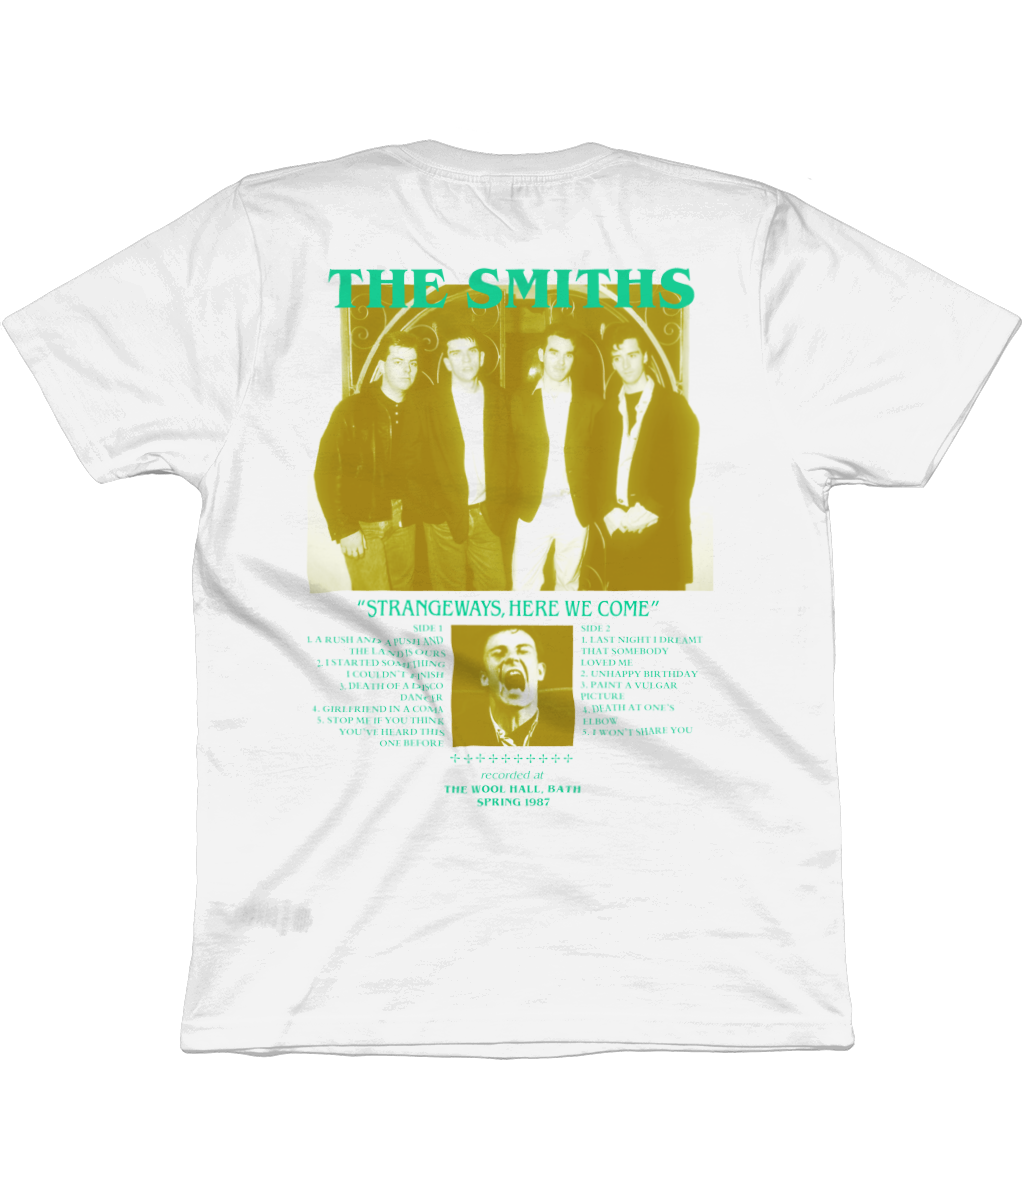 THE SMITHS - 'STRANGEWAYS' - 1987